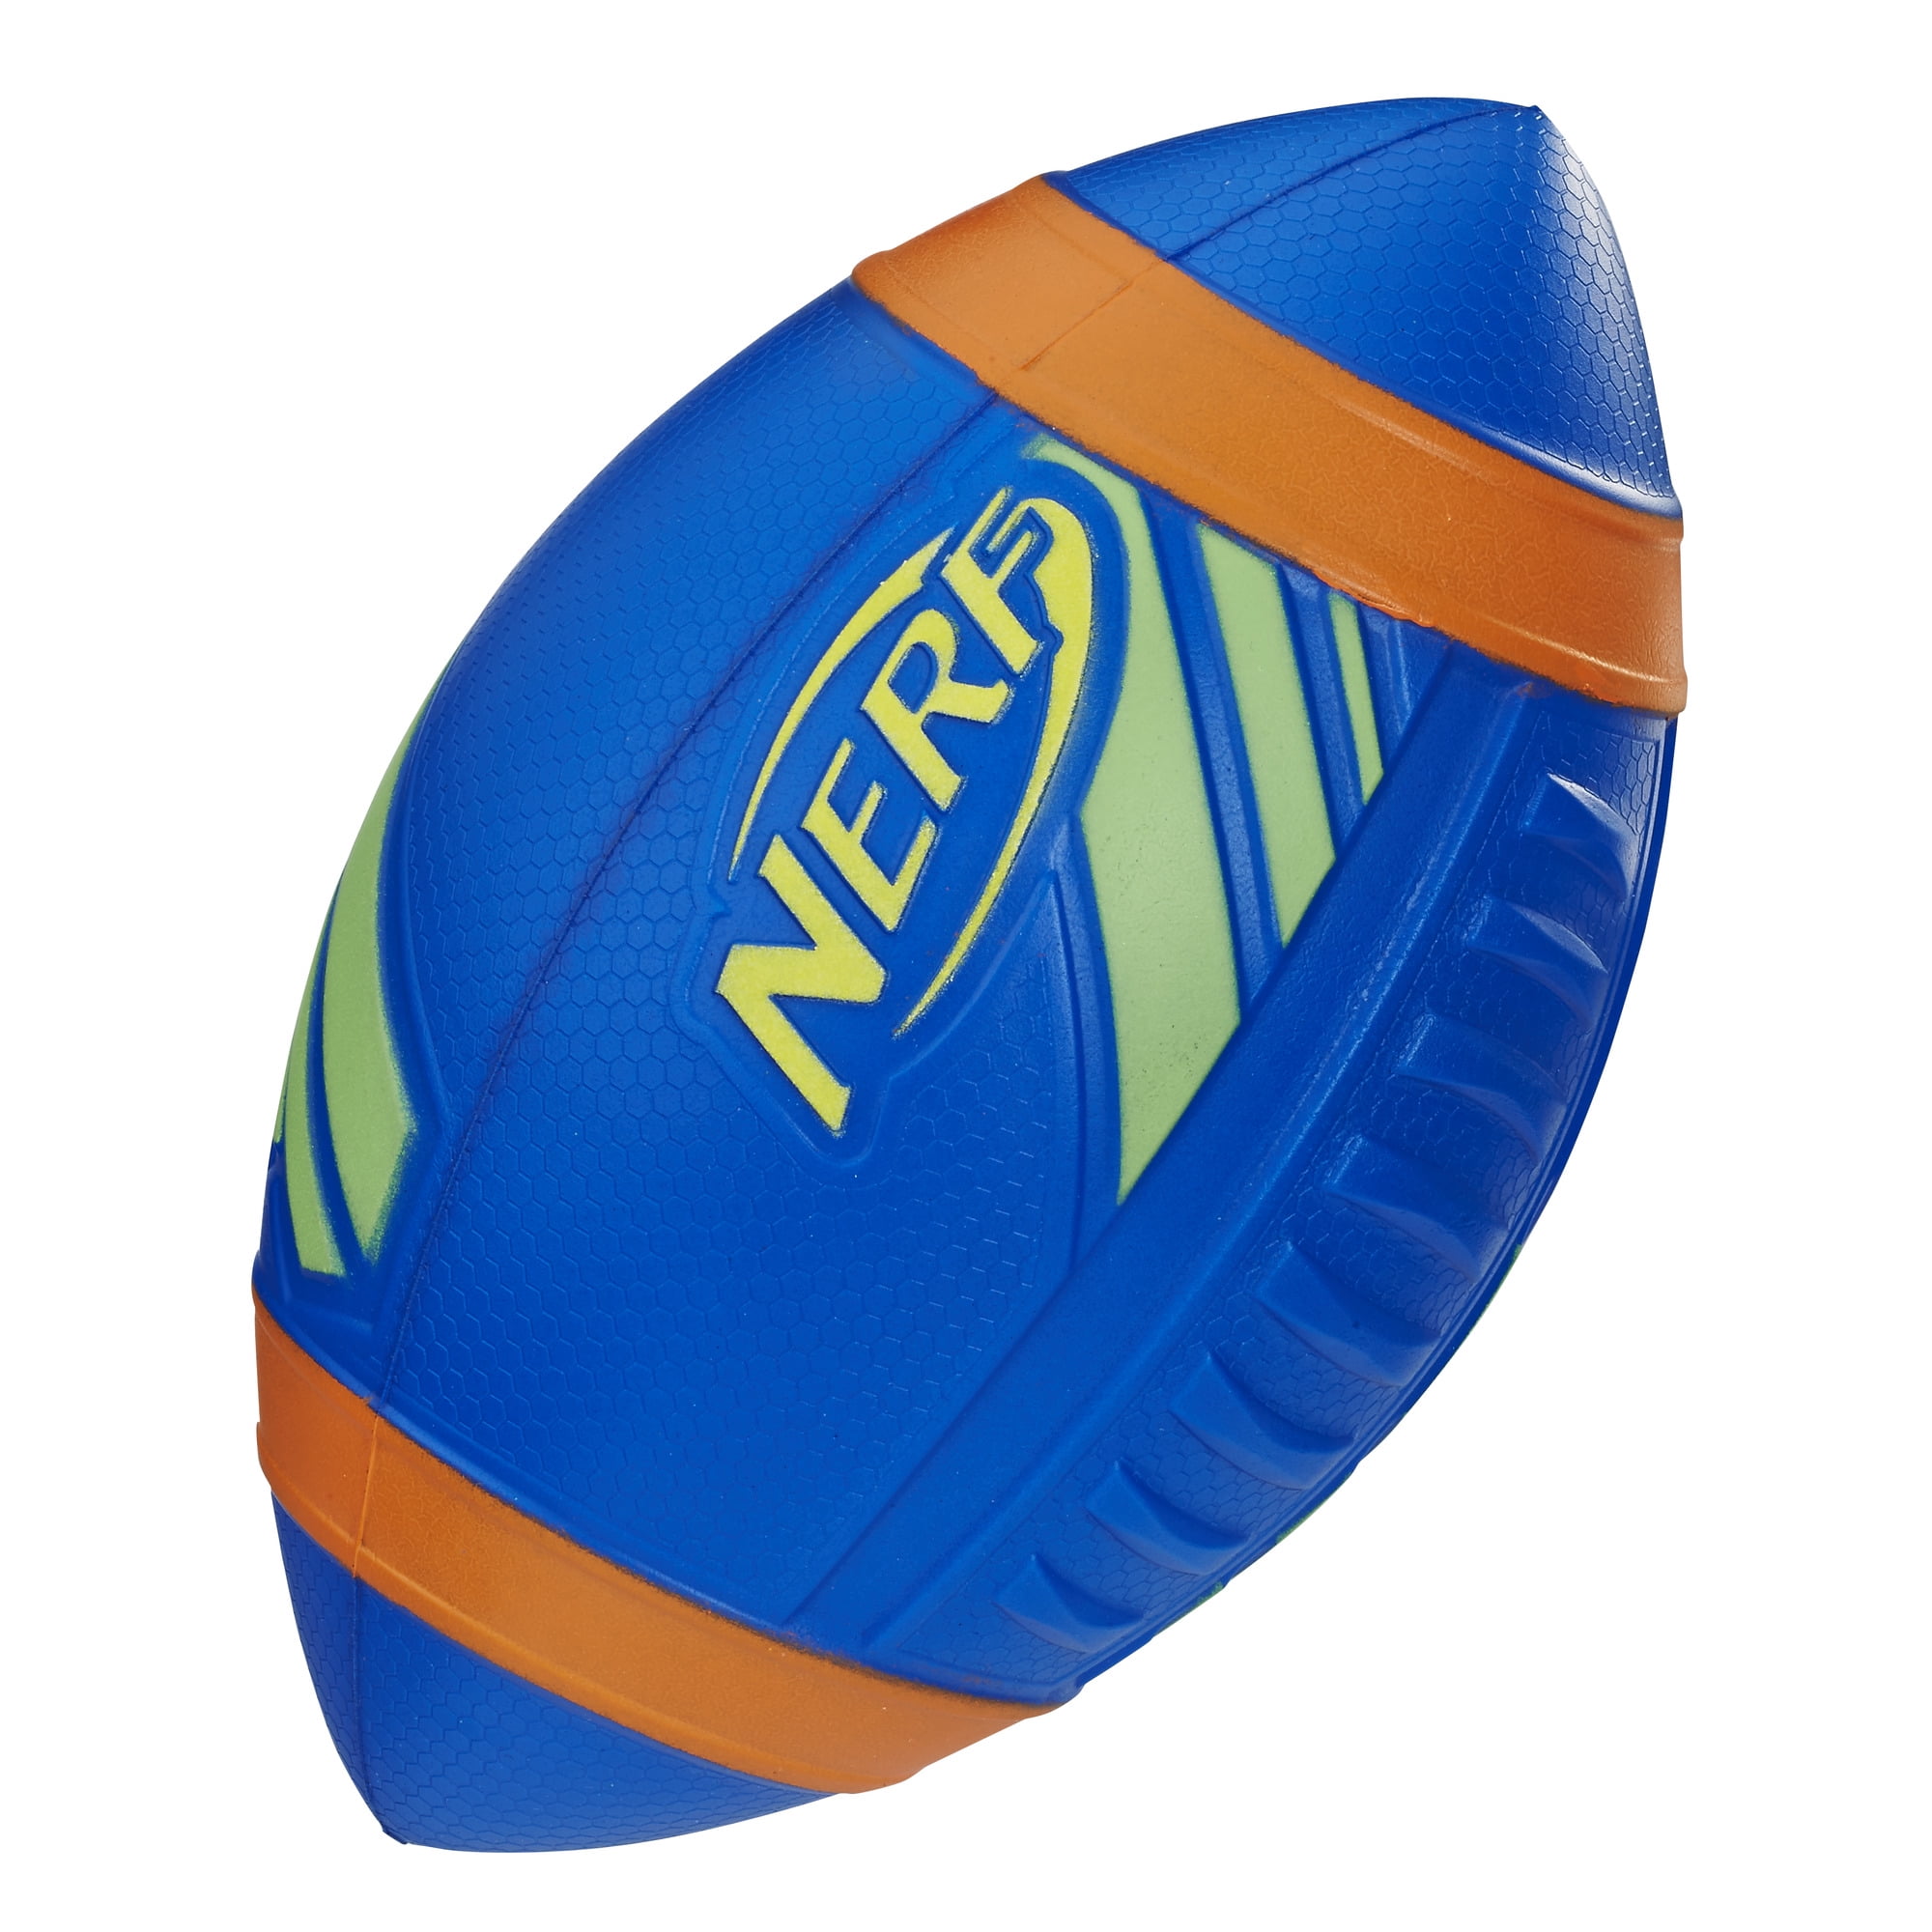 Nerf Sports Pro Grip Football, Green 